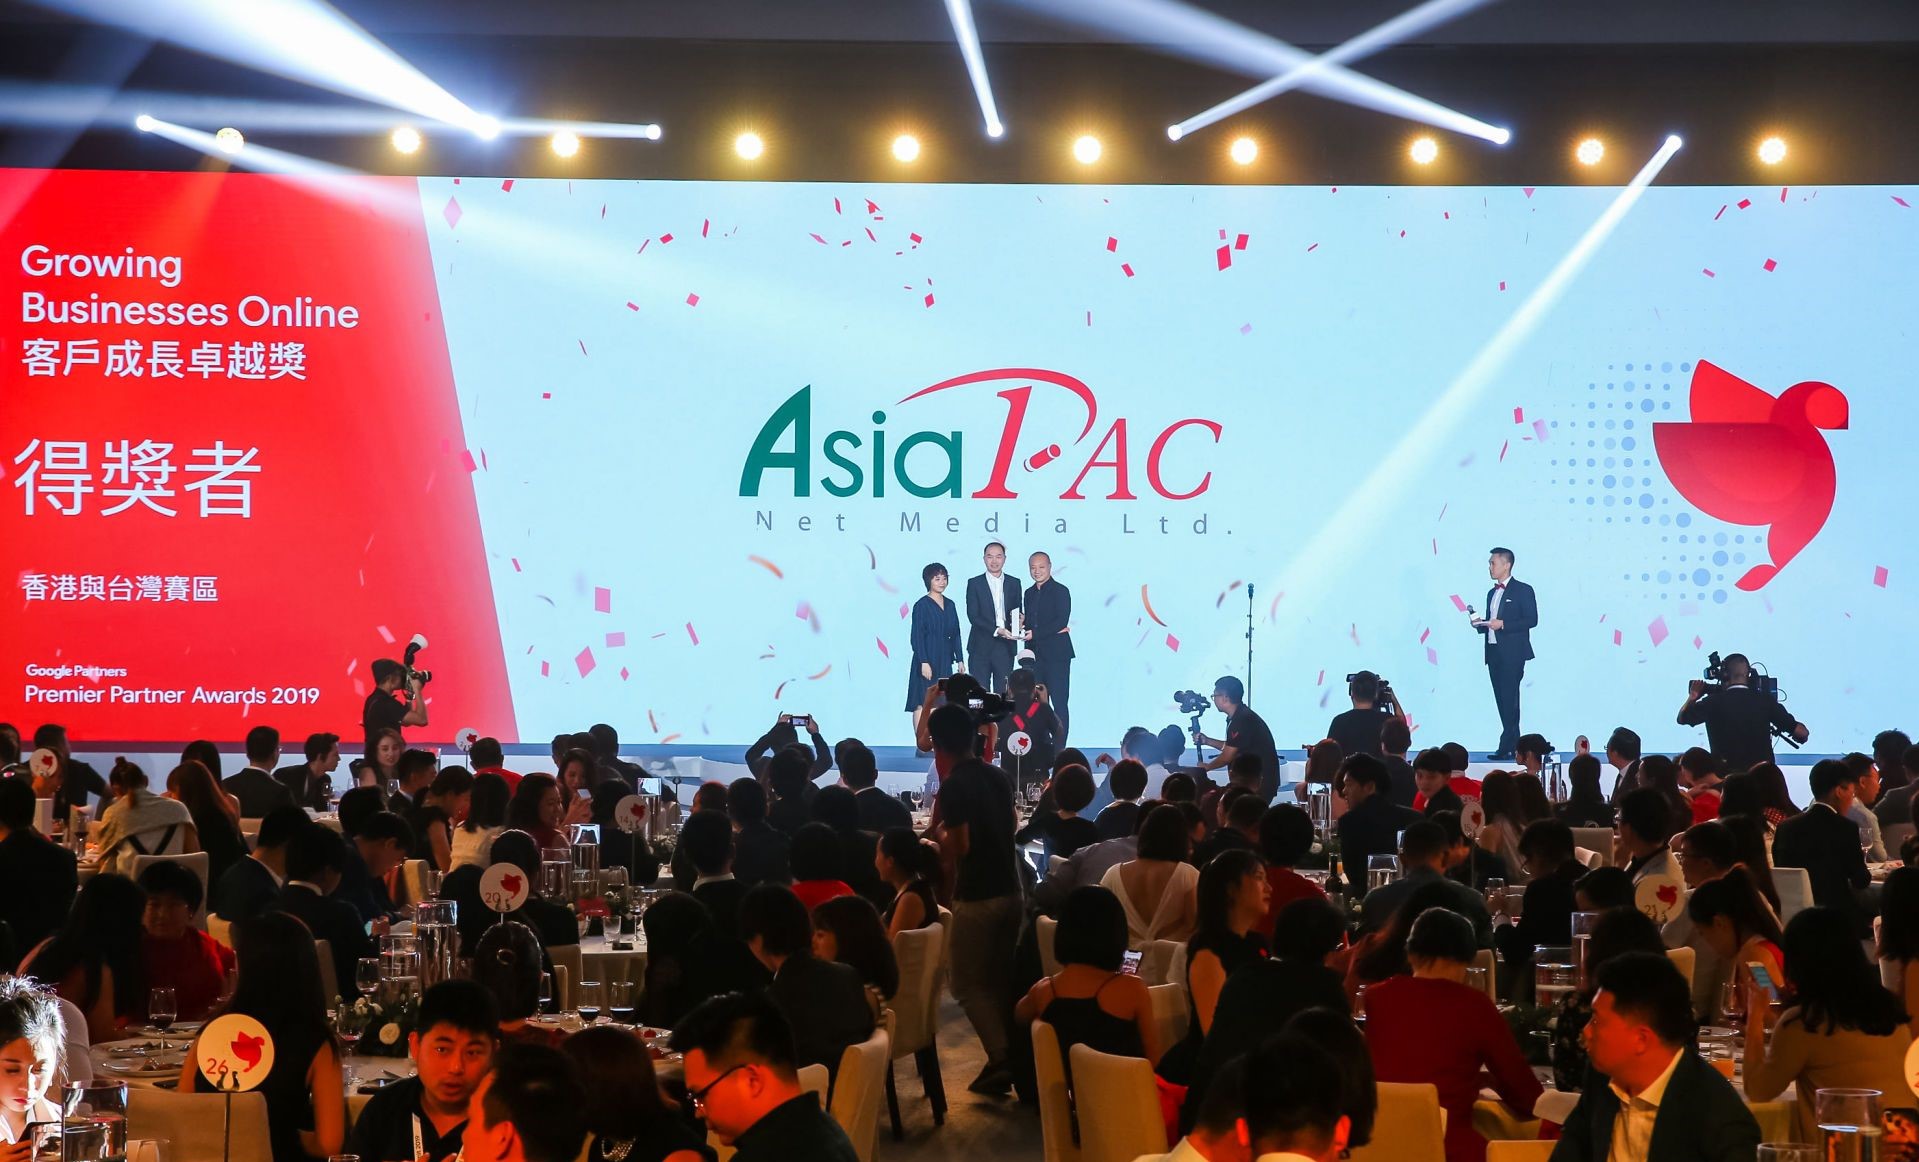 Google Premier Partner Awards 2019_AsiaPac_Growing Businesses Online_2_37312.jpg